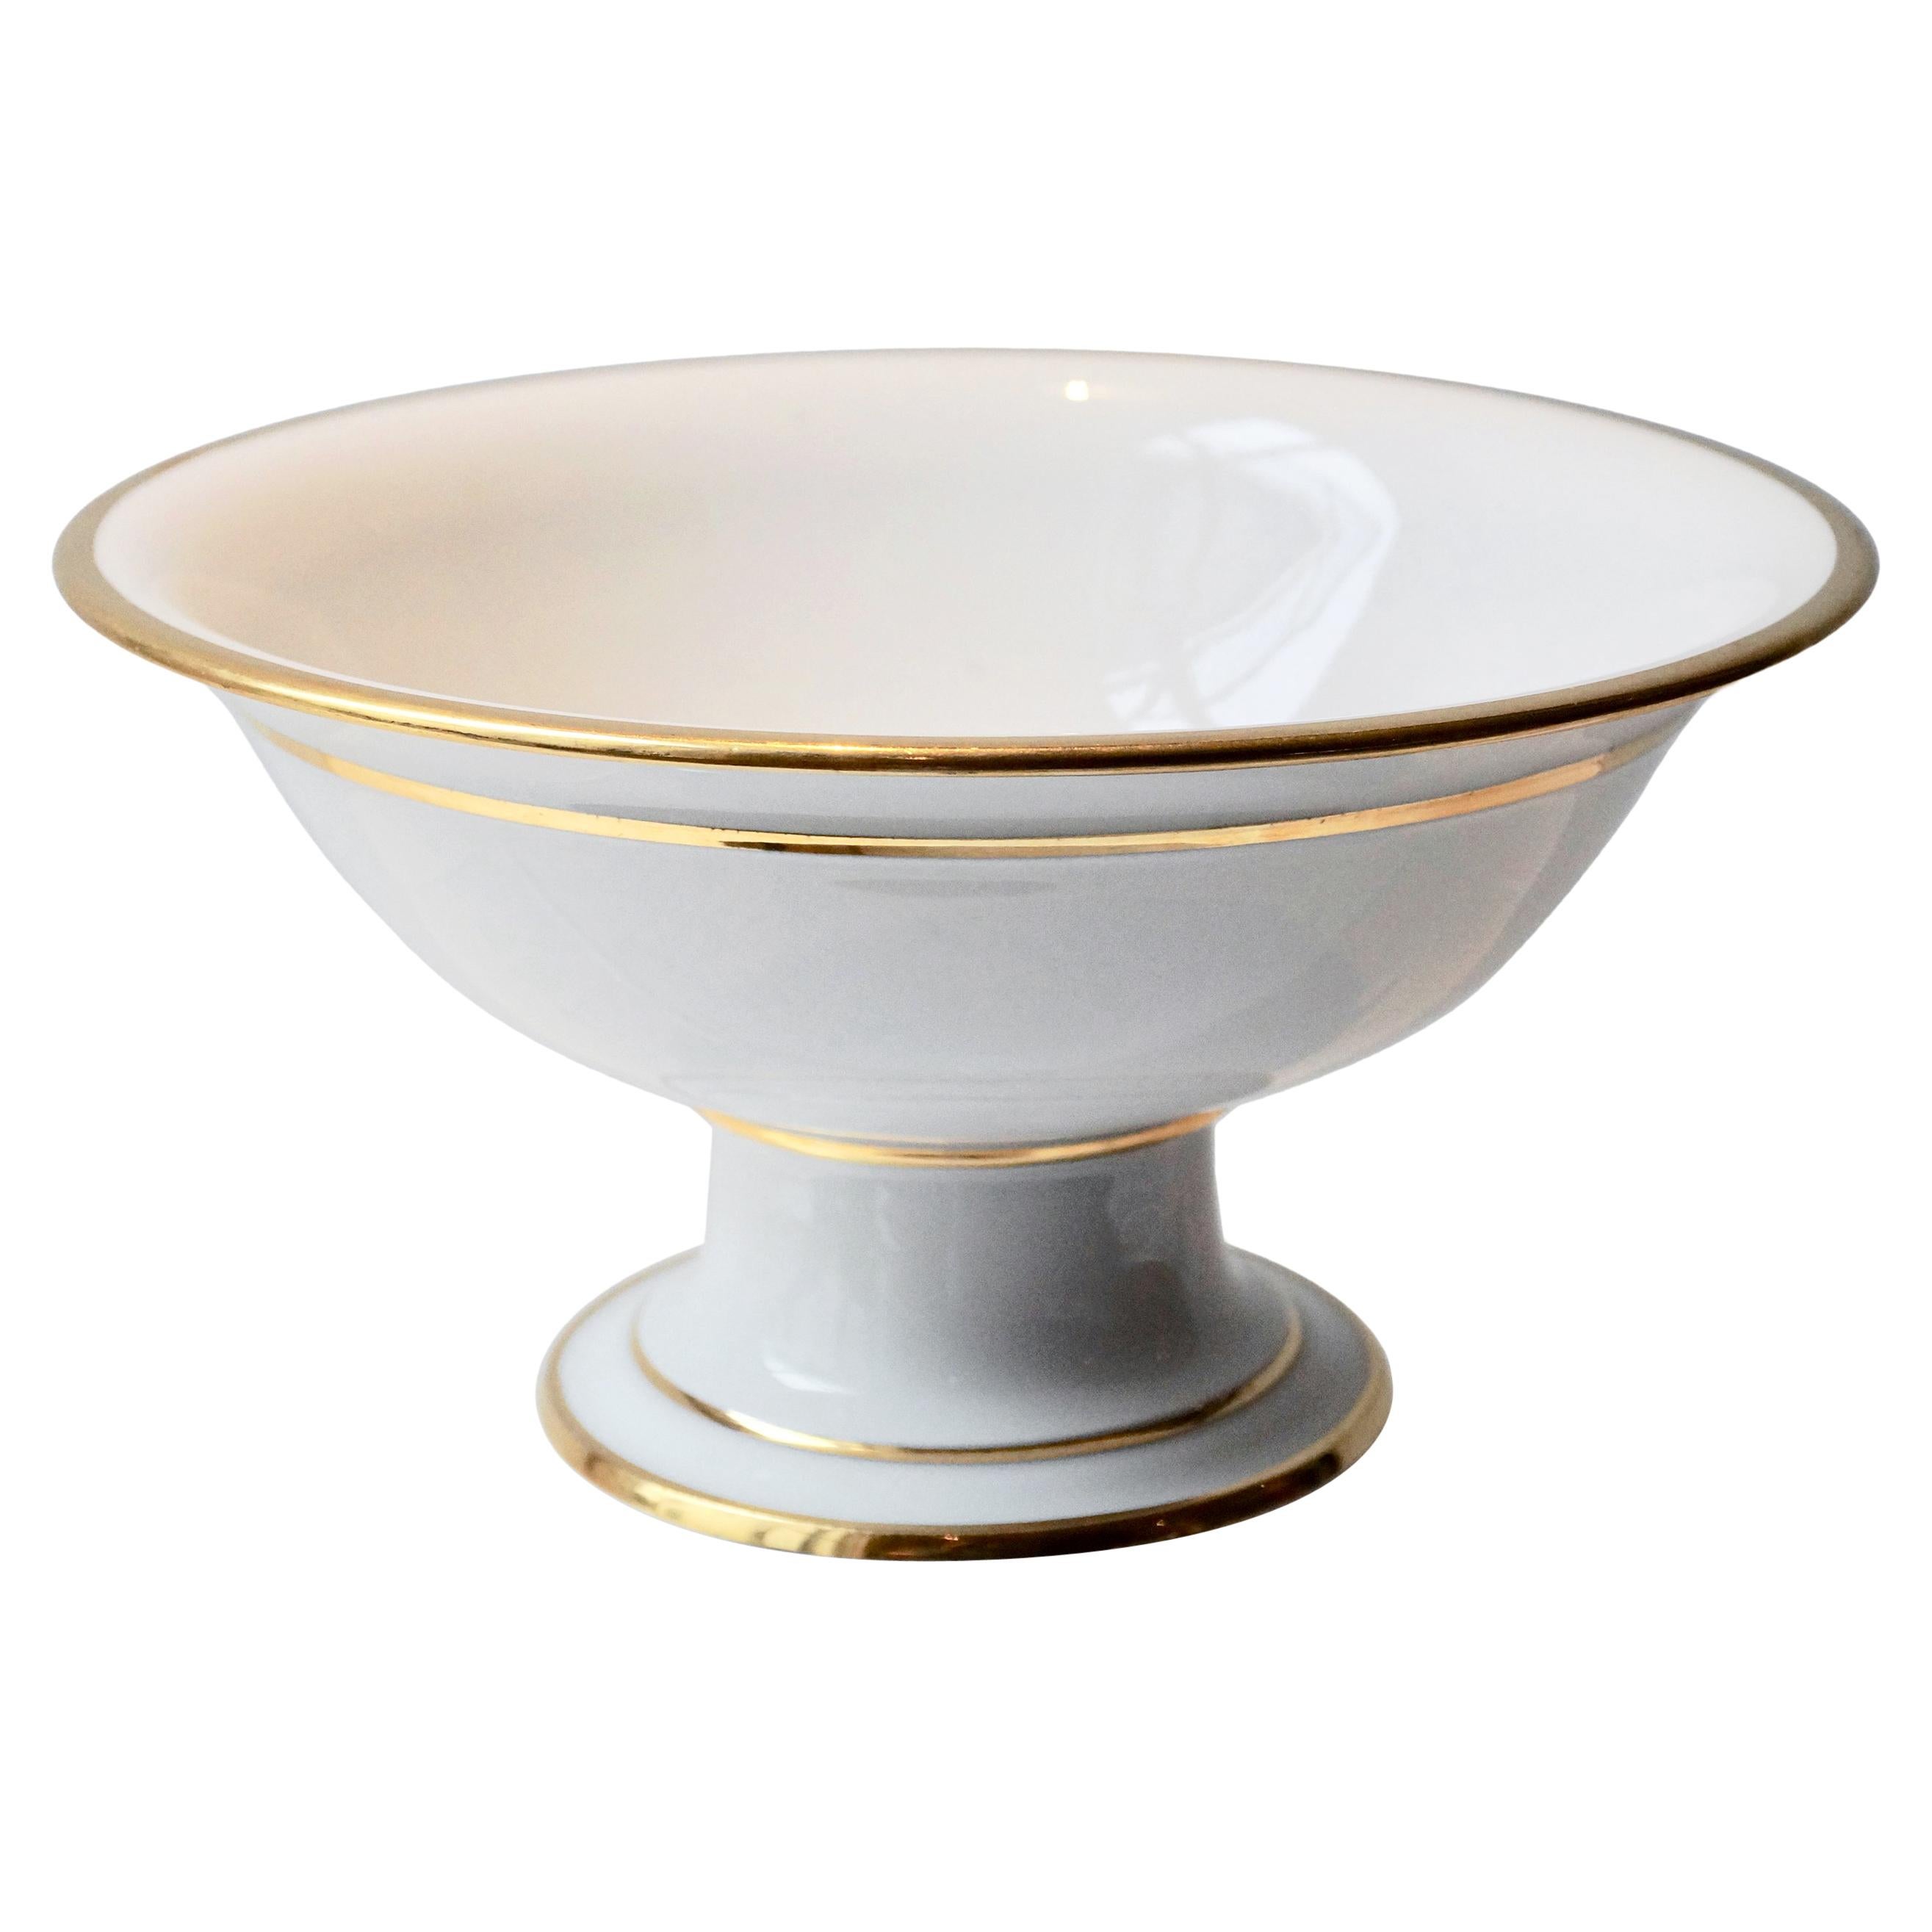 Wonderful Old Paris Porcelain Bowl on Stand, France, 1820s For Sale